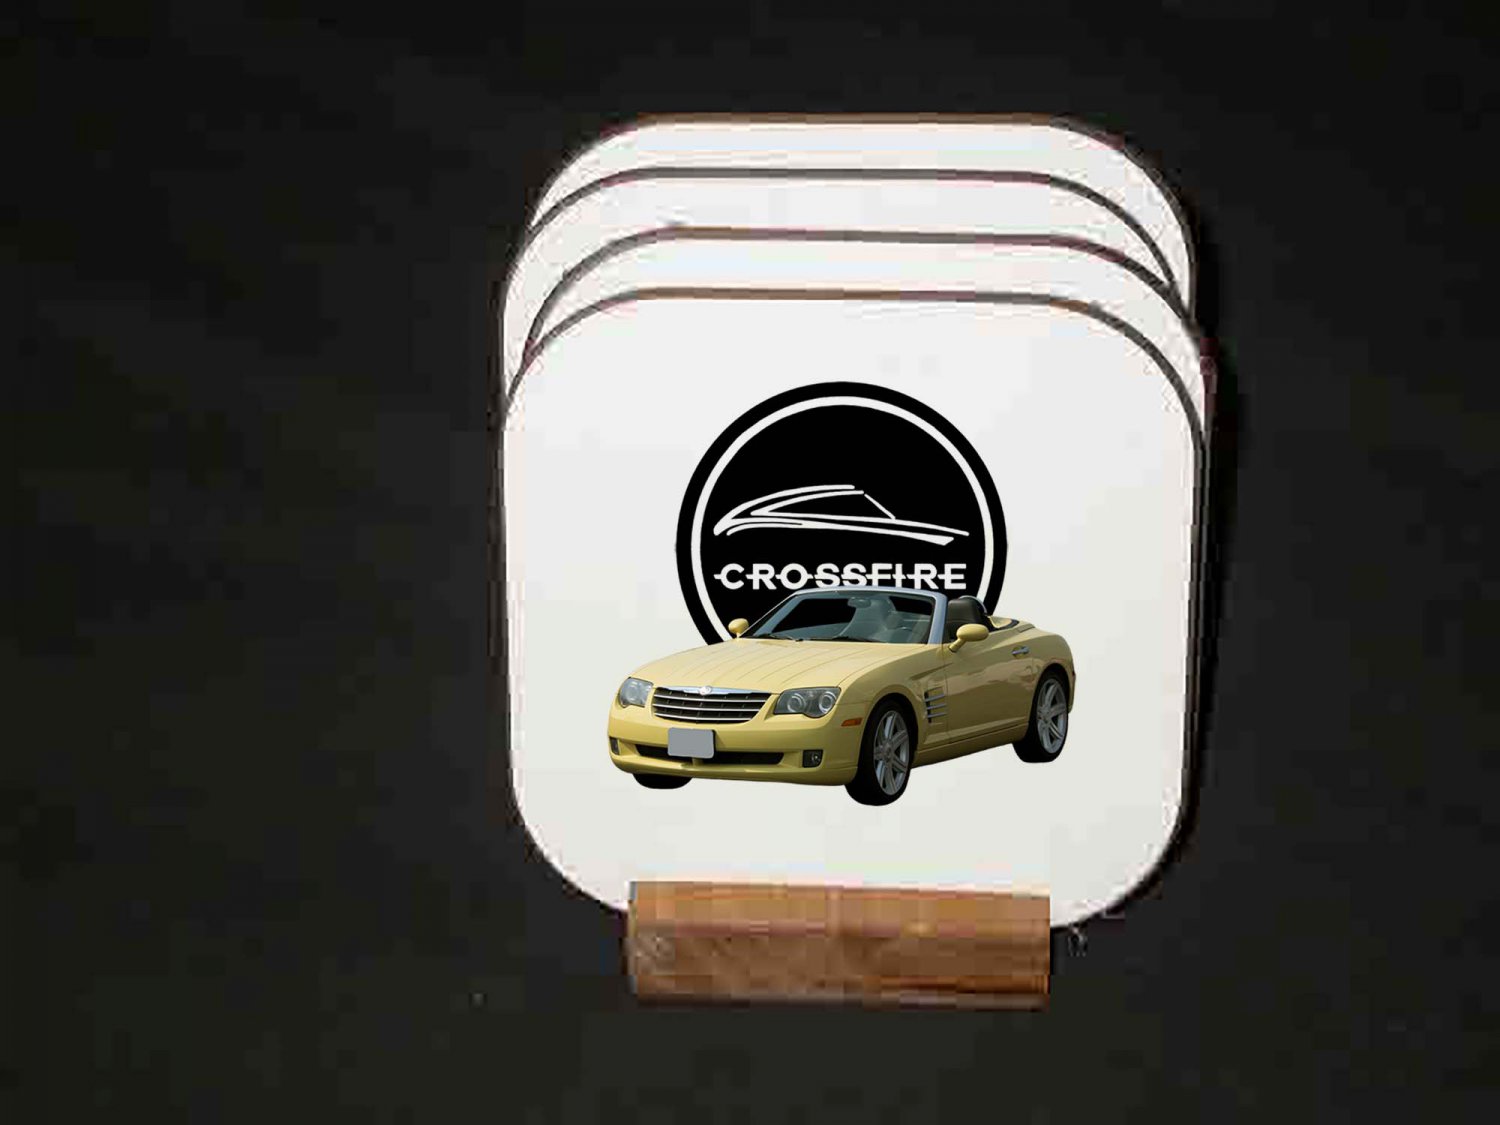 Beautiful 2005 yellow Chrysler Crossfire Hard Coaster set!